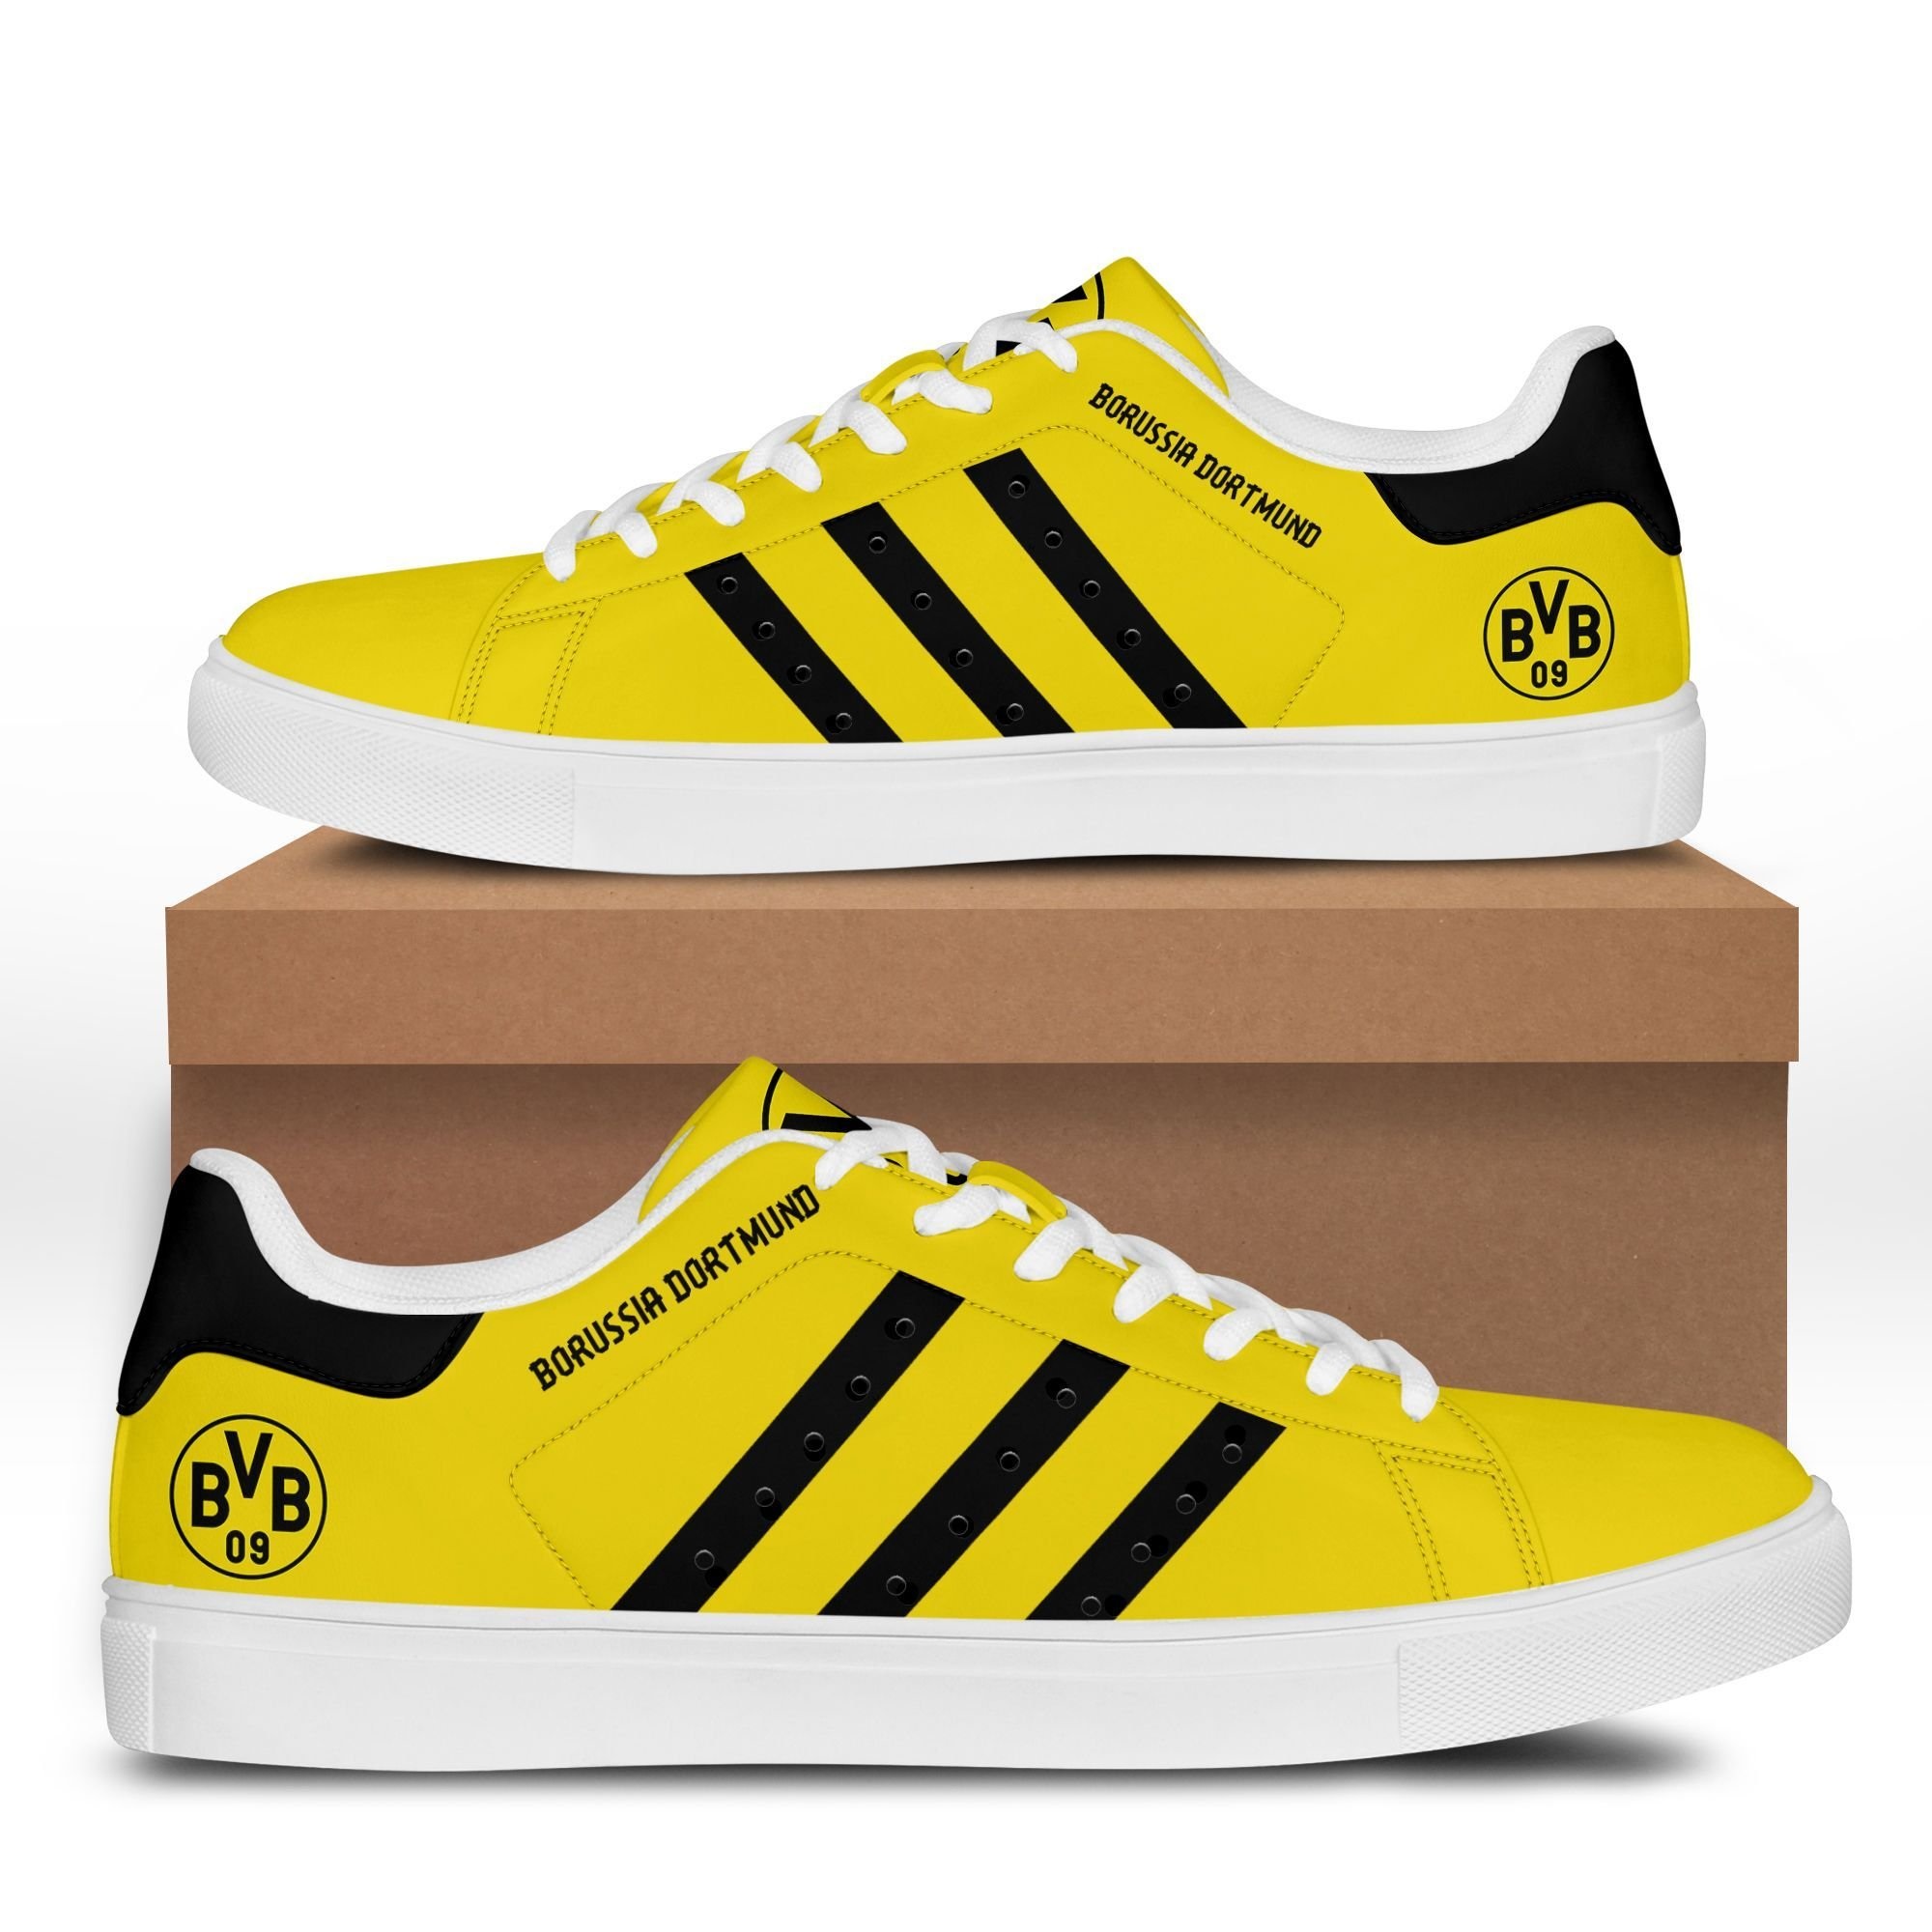 Dortmund stan smith shoes